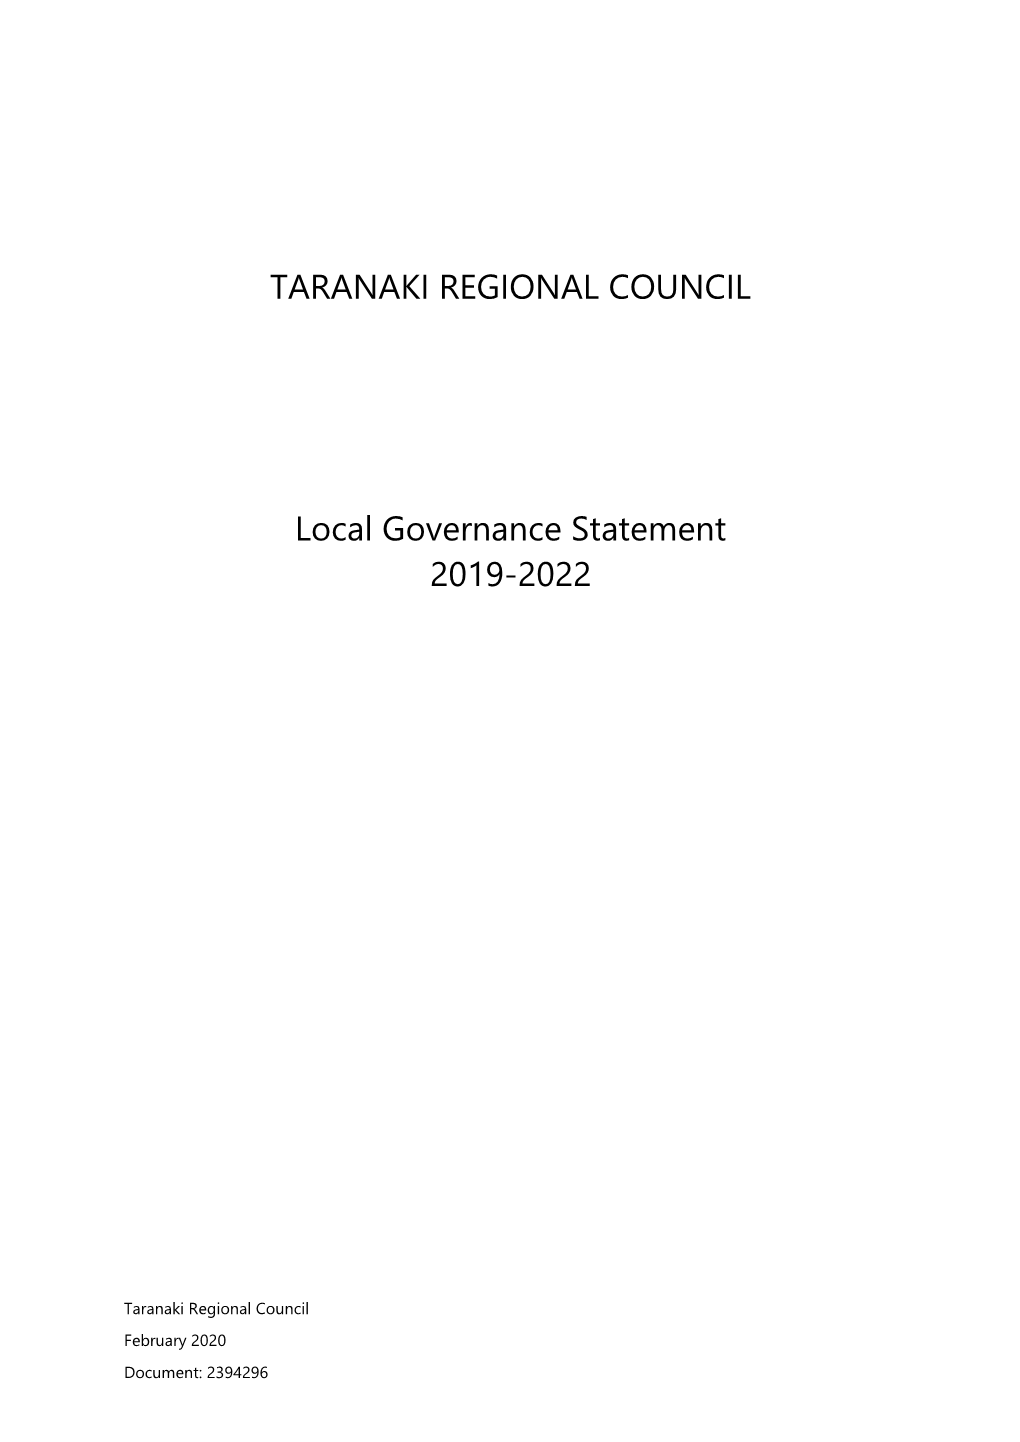 TARANAKI REGIONAL COUNCIL Local Governance Statement 2019